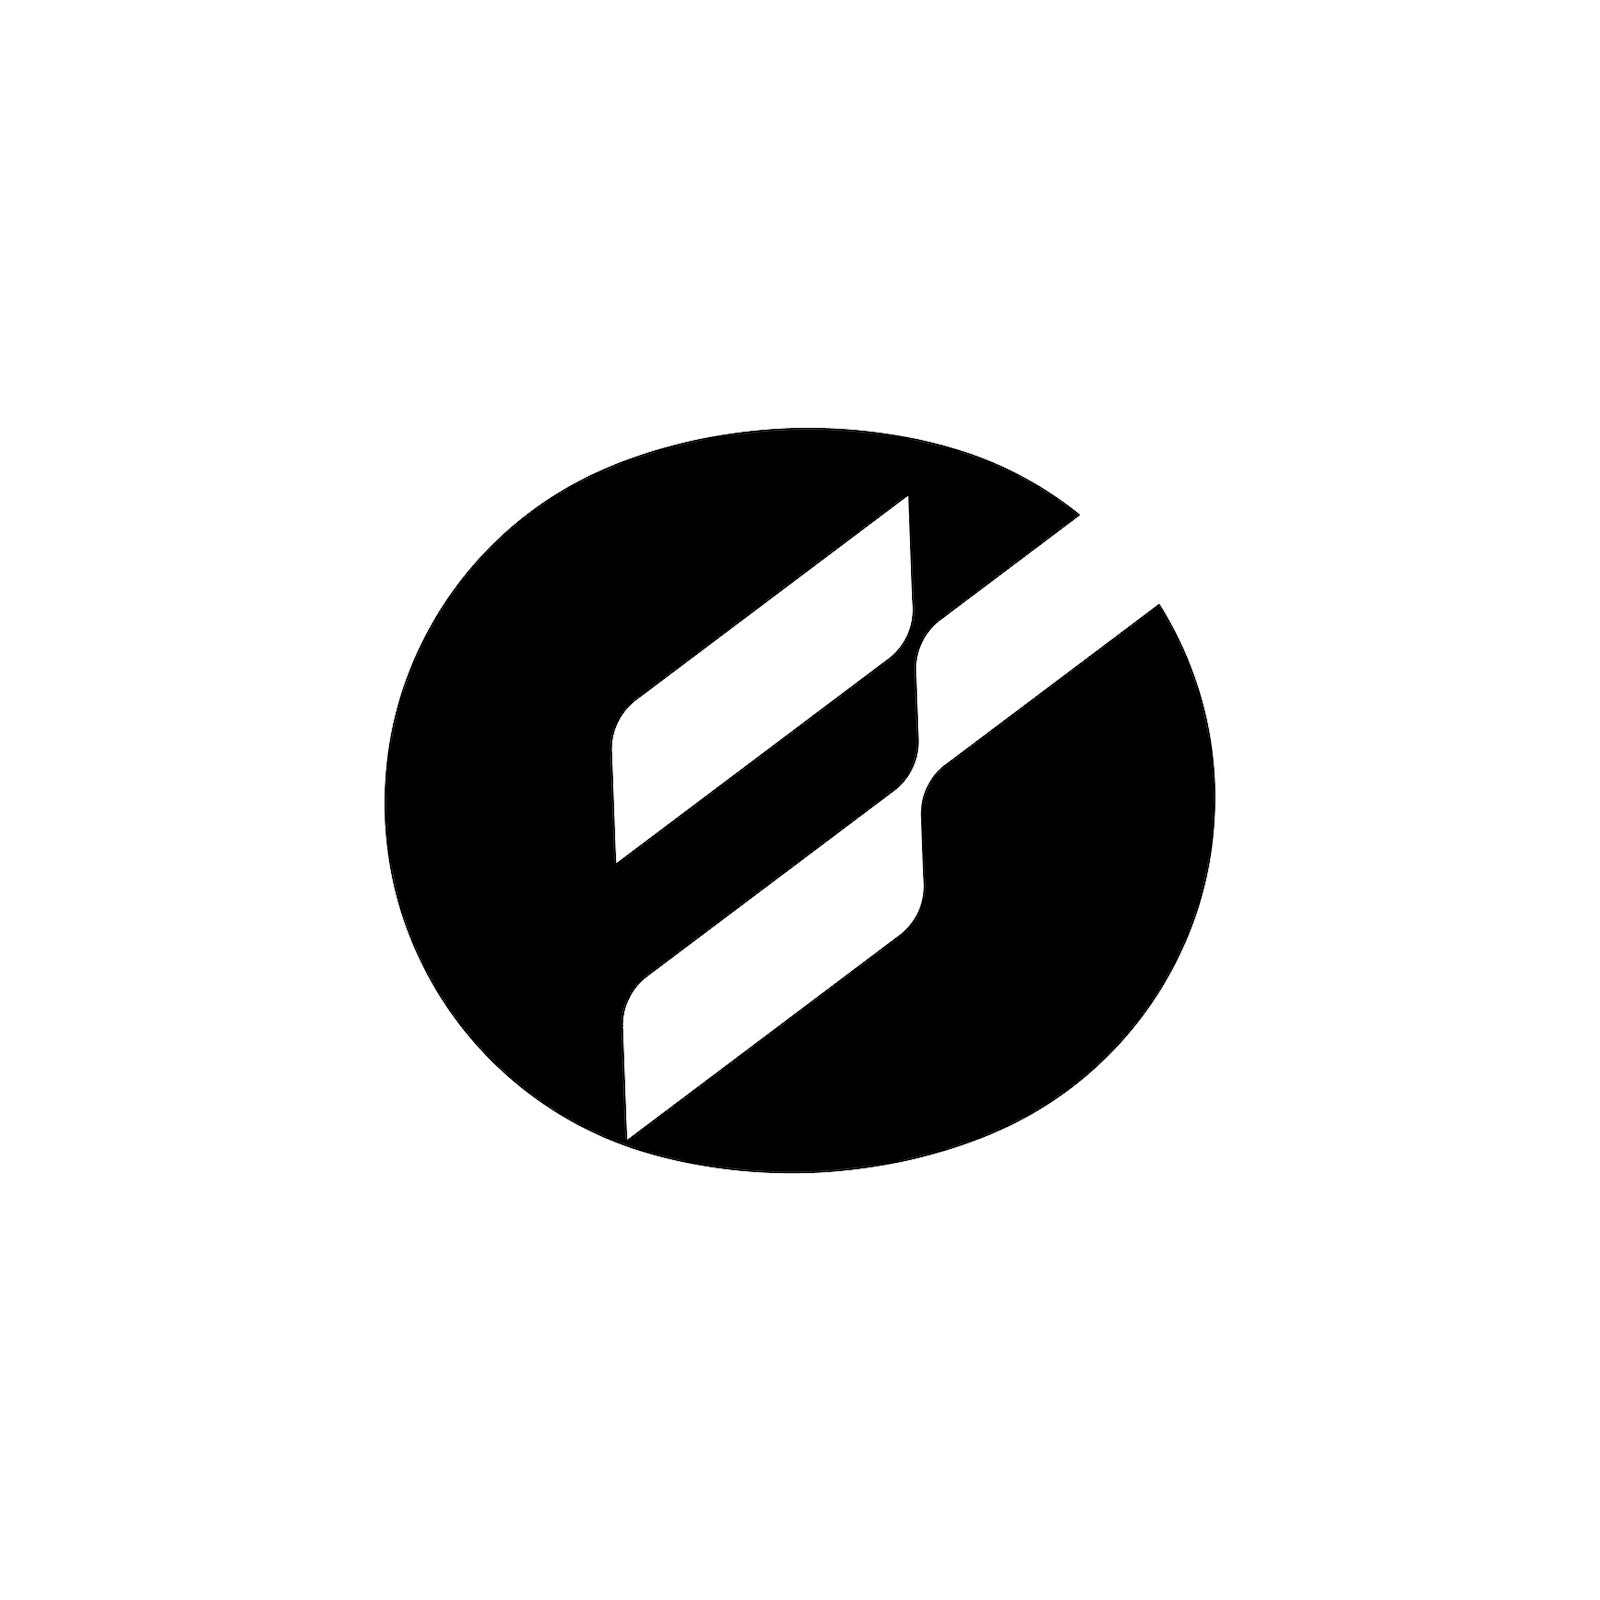 Mitsui Bank Logo | Takenobu Igarashi